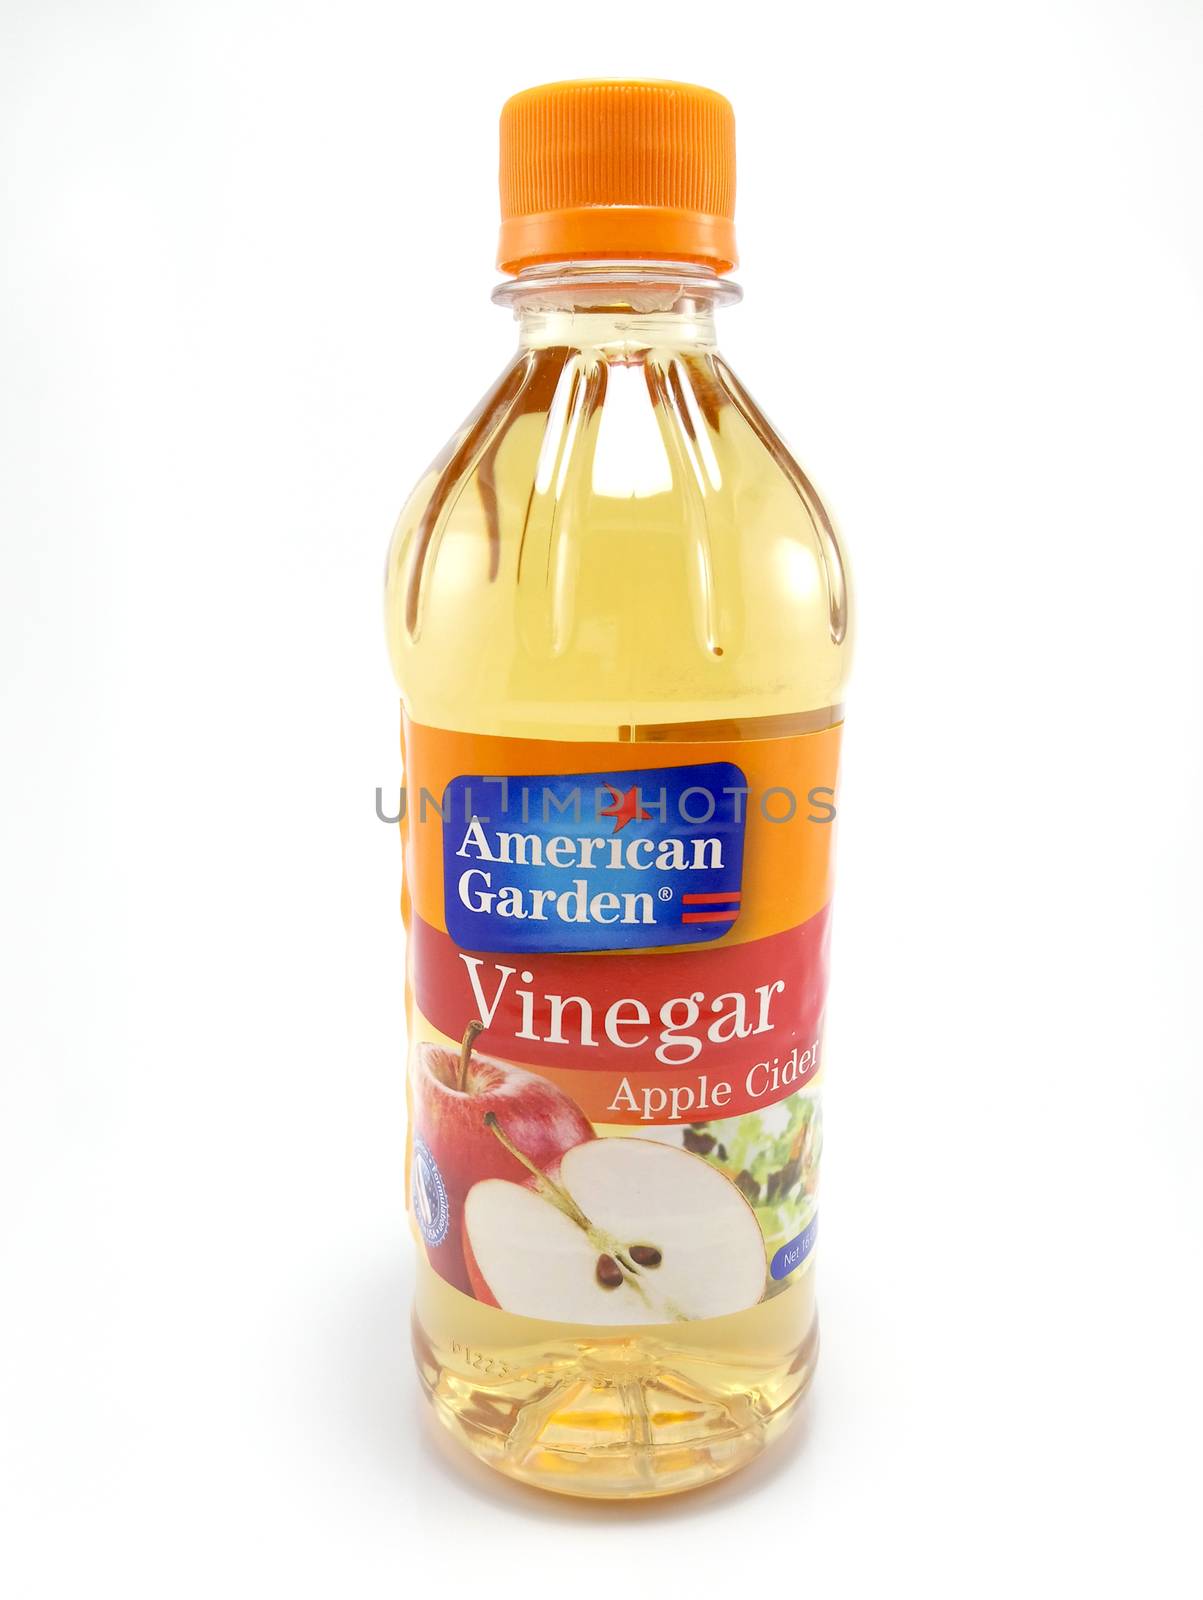 MANILA, PH - JUNE 23 - American Garden apple cider vinegar bottle on June 23, 2020 in Manila, Philippines.